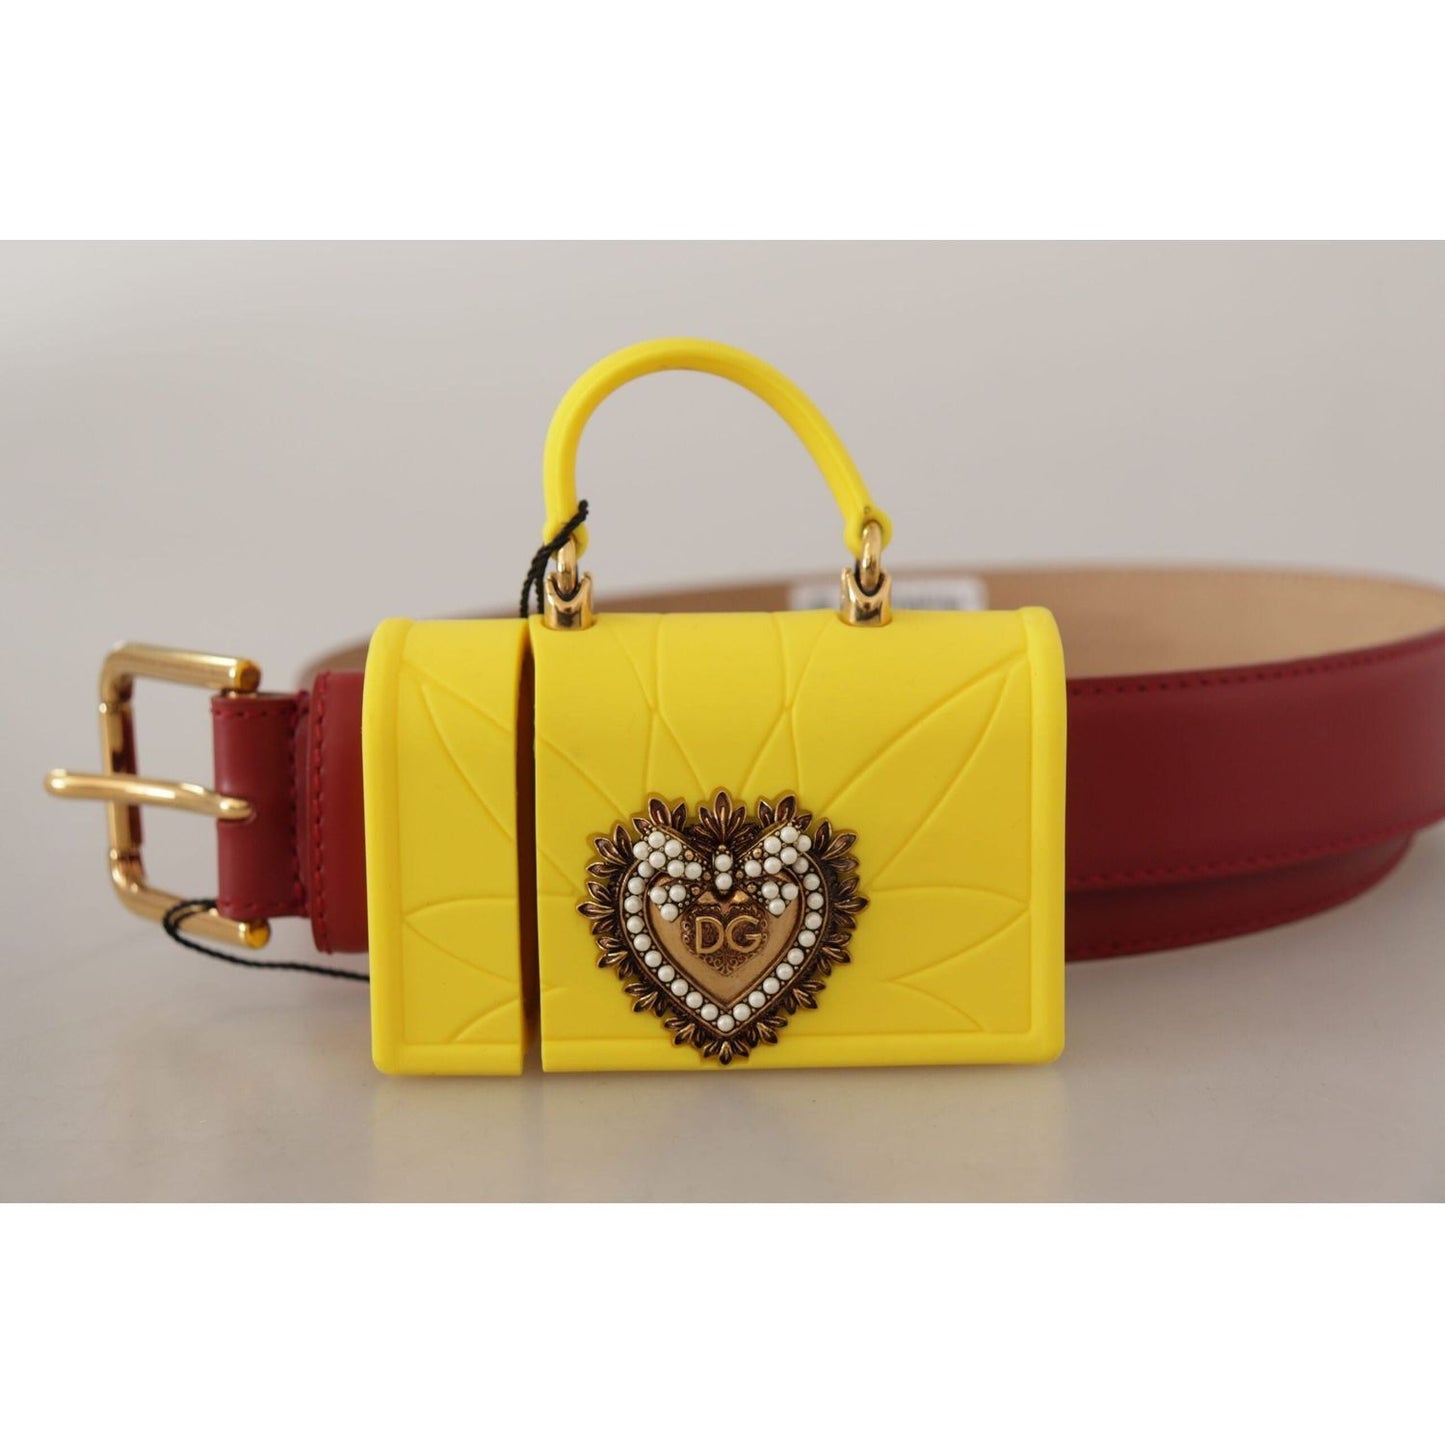 Dolce & Gabbana Elegant Red Leather Engraved Buckle Belt red-leather-yellow-devotion-heart-bag-buckle-belt IMG_8635-scaled-9e7c57da-f60.jpg